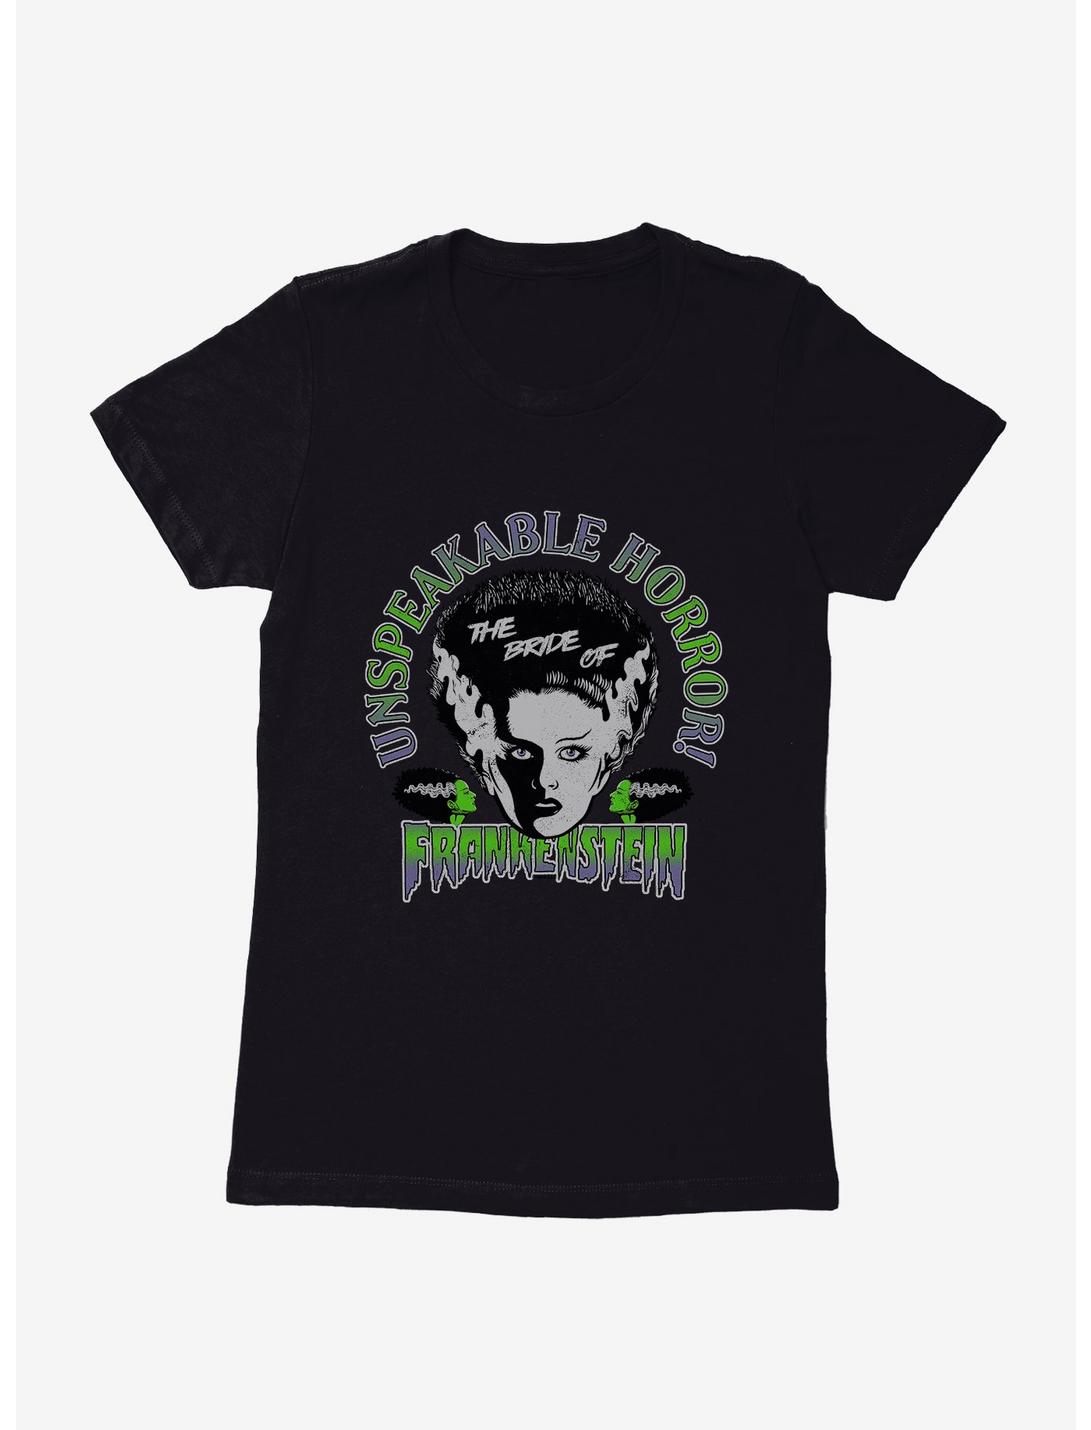 Universal Monsters Bride Of Frankenstein Unspeakable Horror Womens T-Shirt, BLACK, hi-res